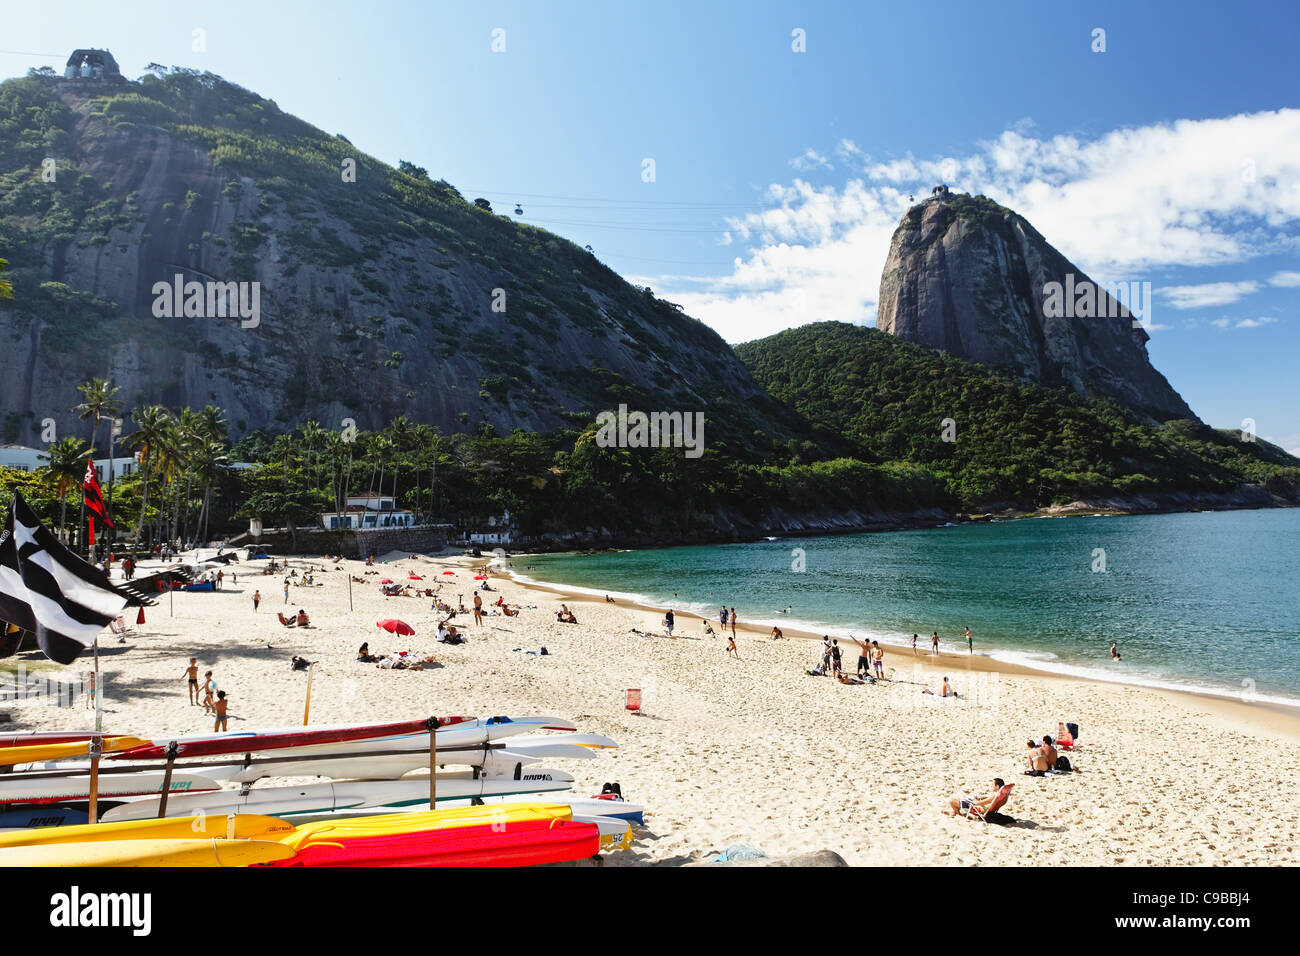 View of Sugarloaf Mountain from Vermelha Beach, Rio de Janeiro, Brazil Stock Photo